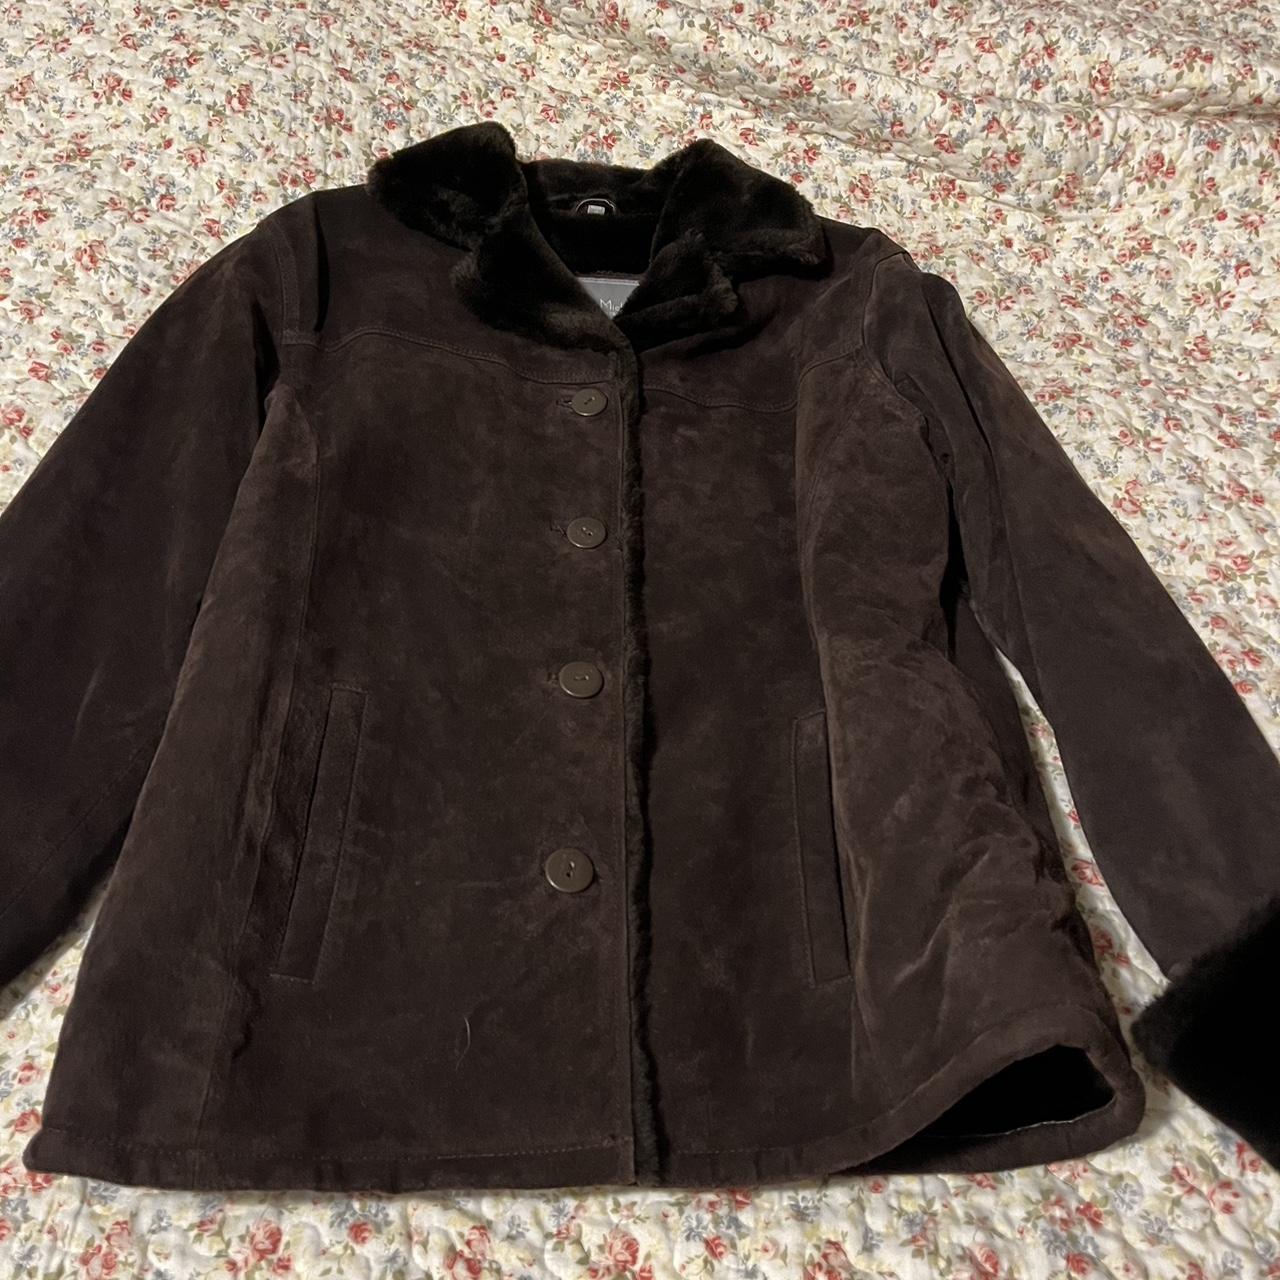 Vintage 90s leather fur trim coat 100% leather and... - Depop